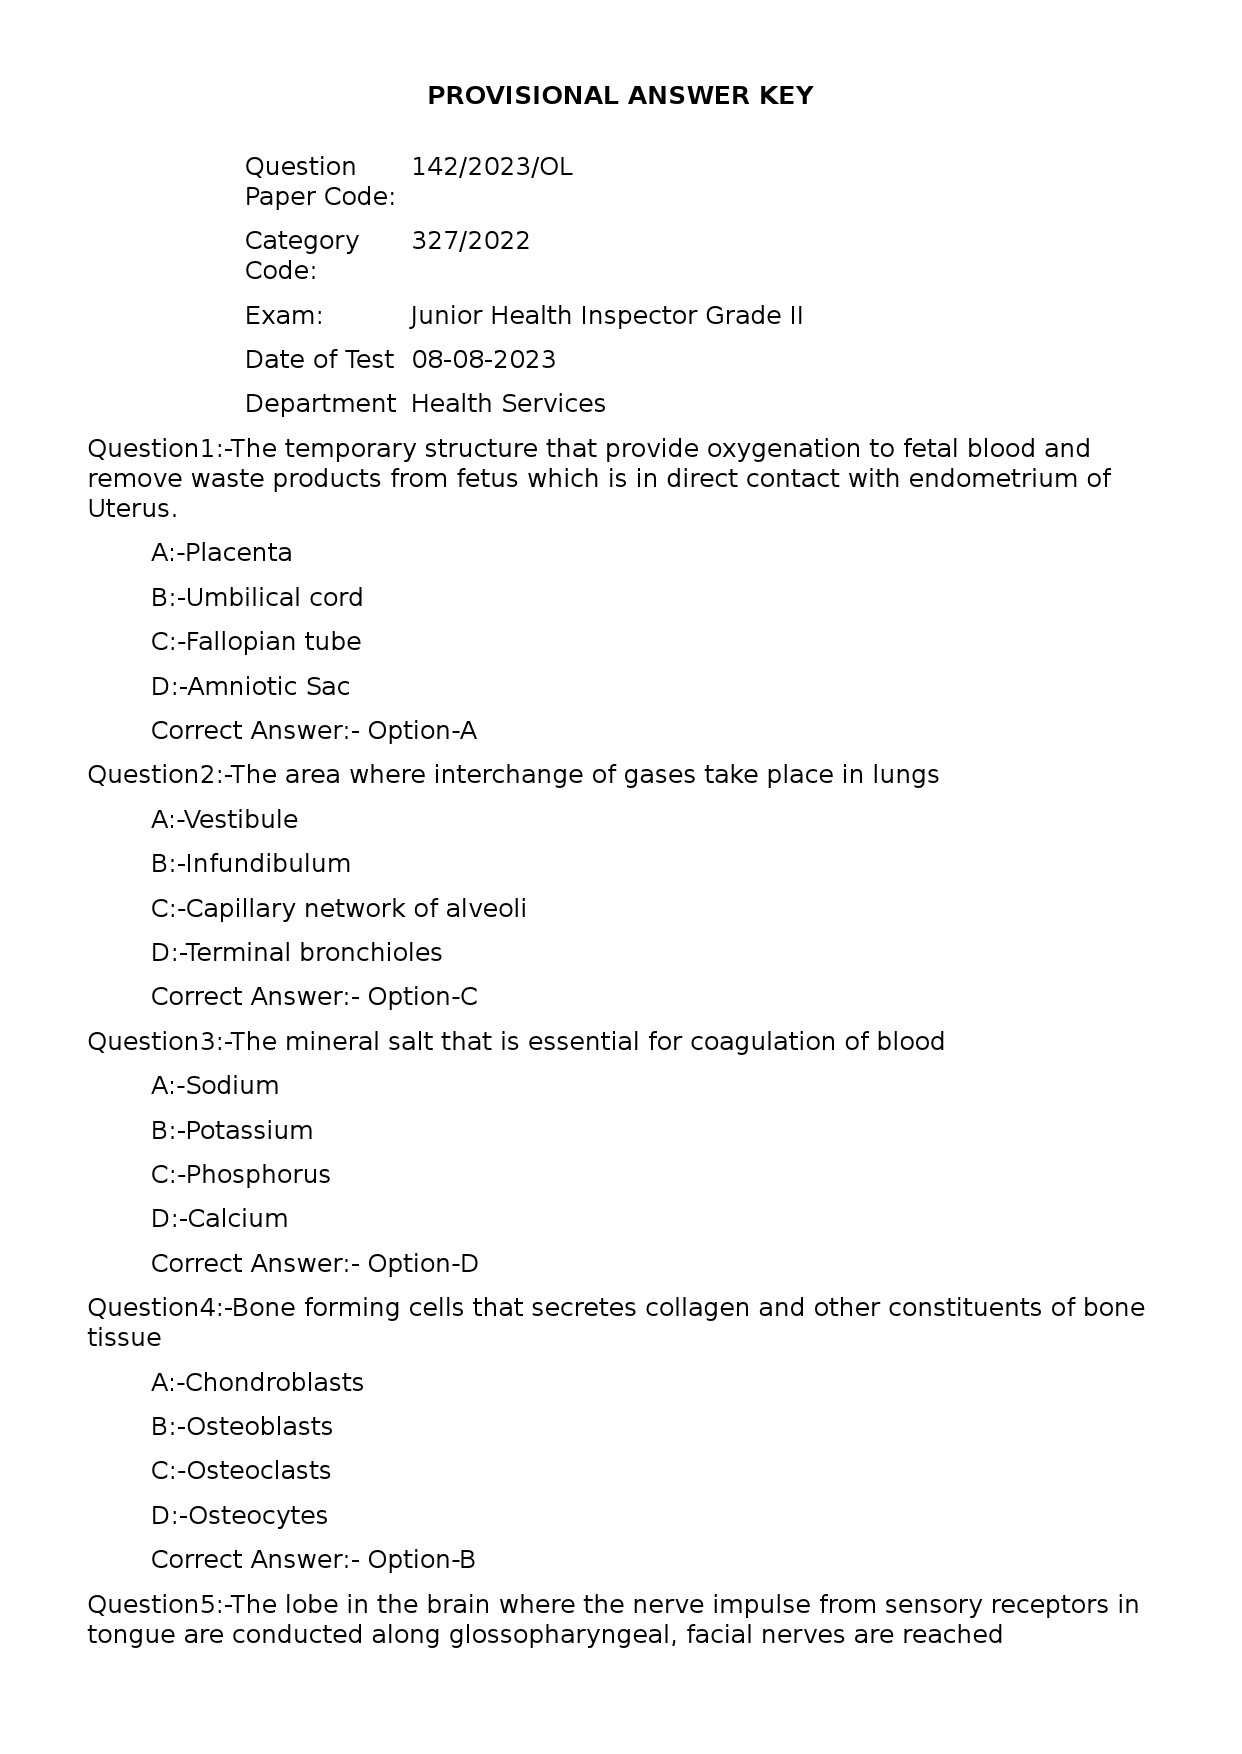 KPSC Junior Health Inspector Grade II Exam 2023 Code 1422023OL 1